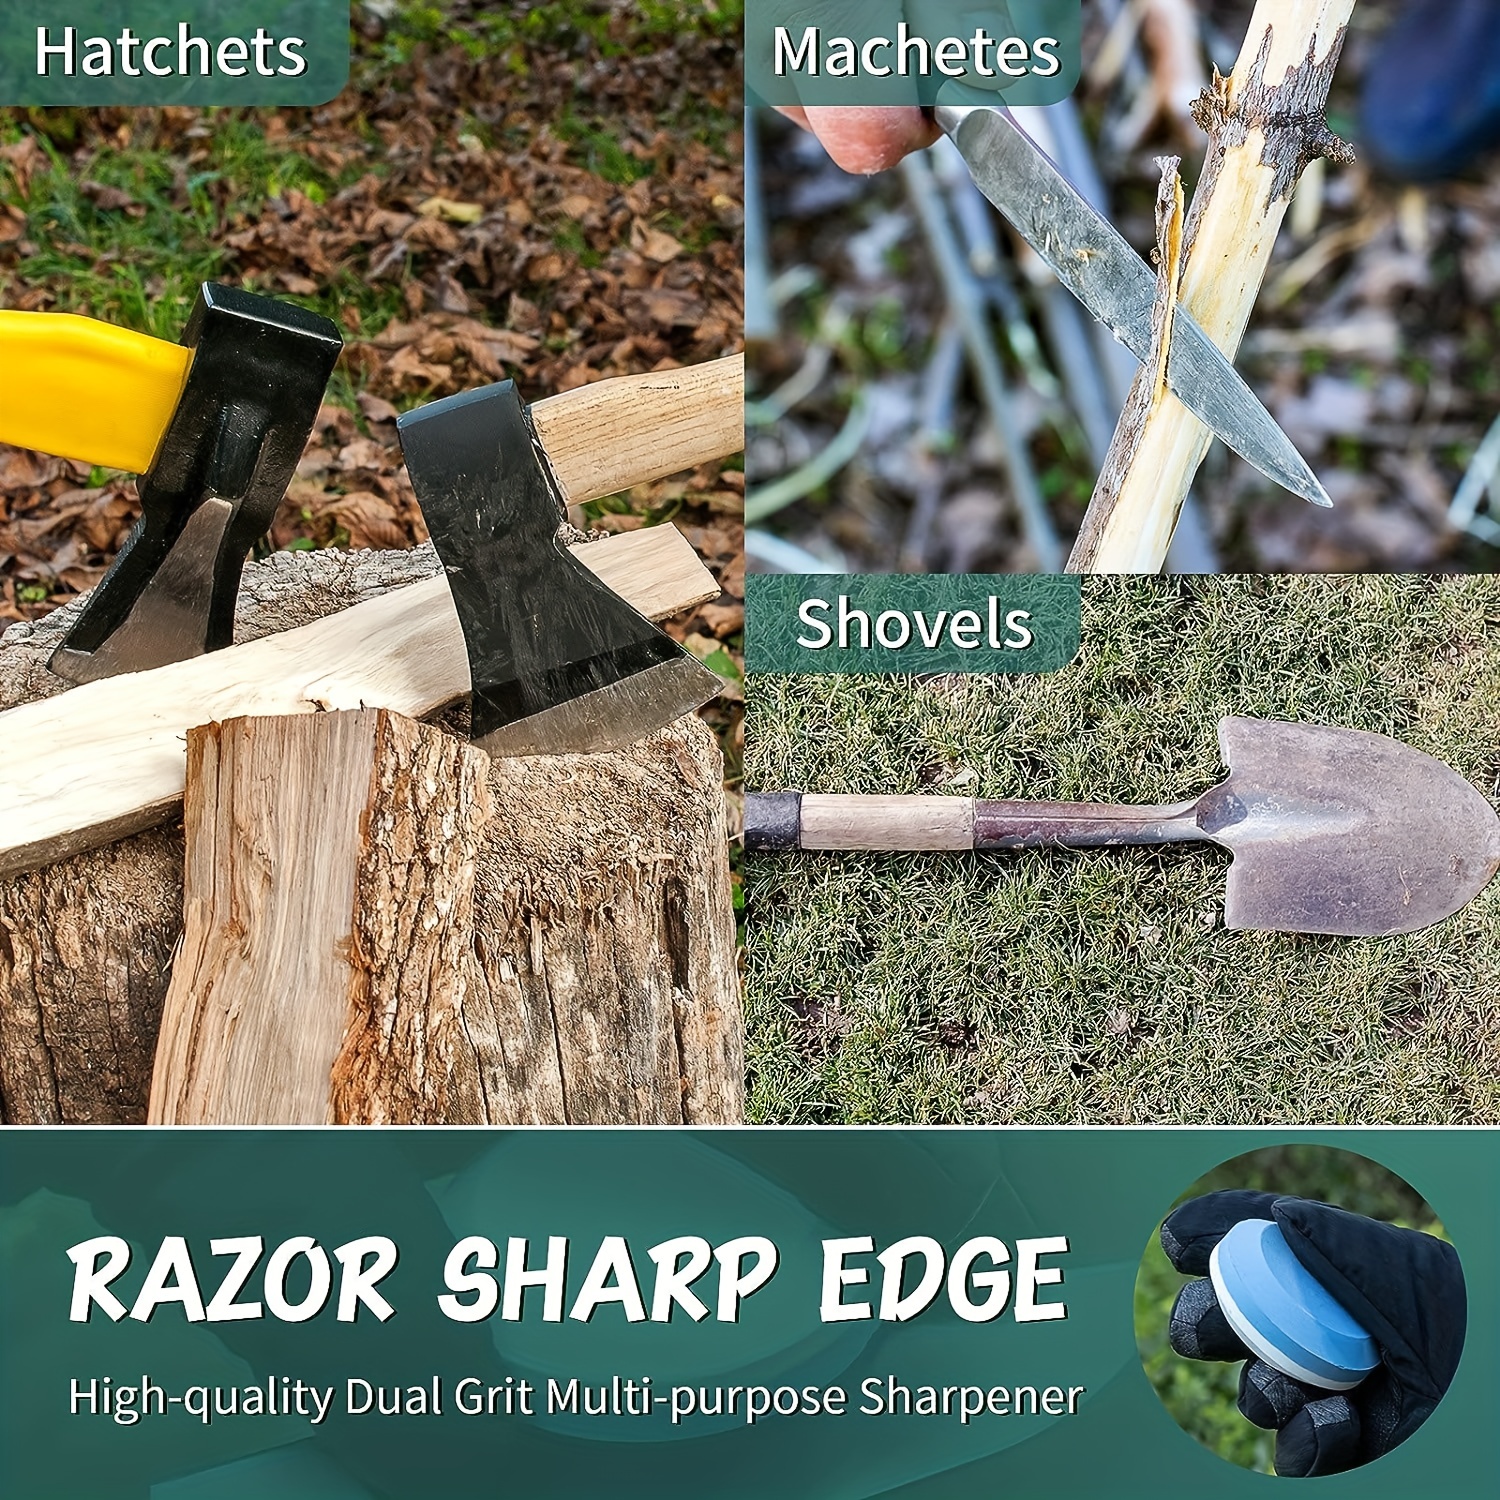 Axe Sharpener Hatchet Sharpening Stone Multipurpose Sharpening